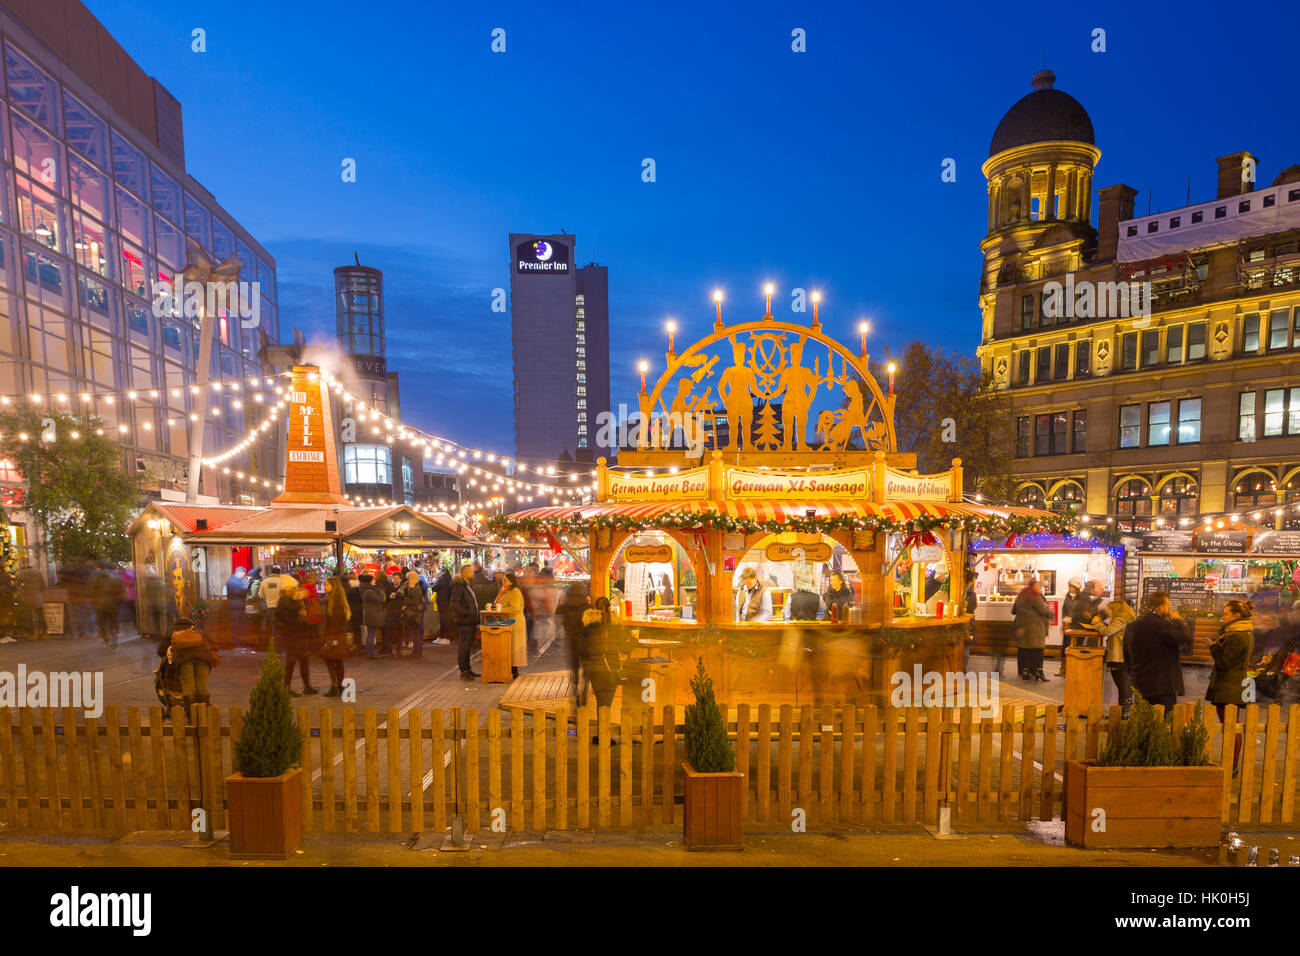 Christmas Market on Exchange Square, Manchester, England, United Kingdom Stock Photo